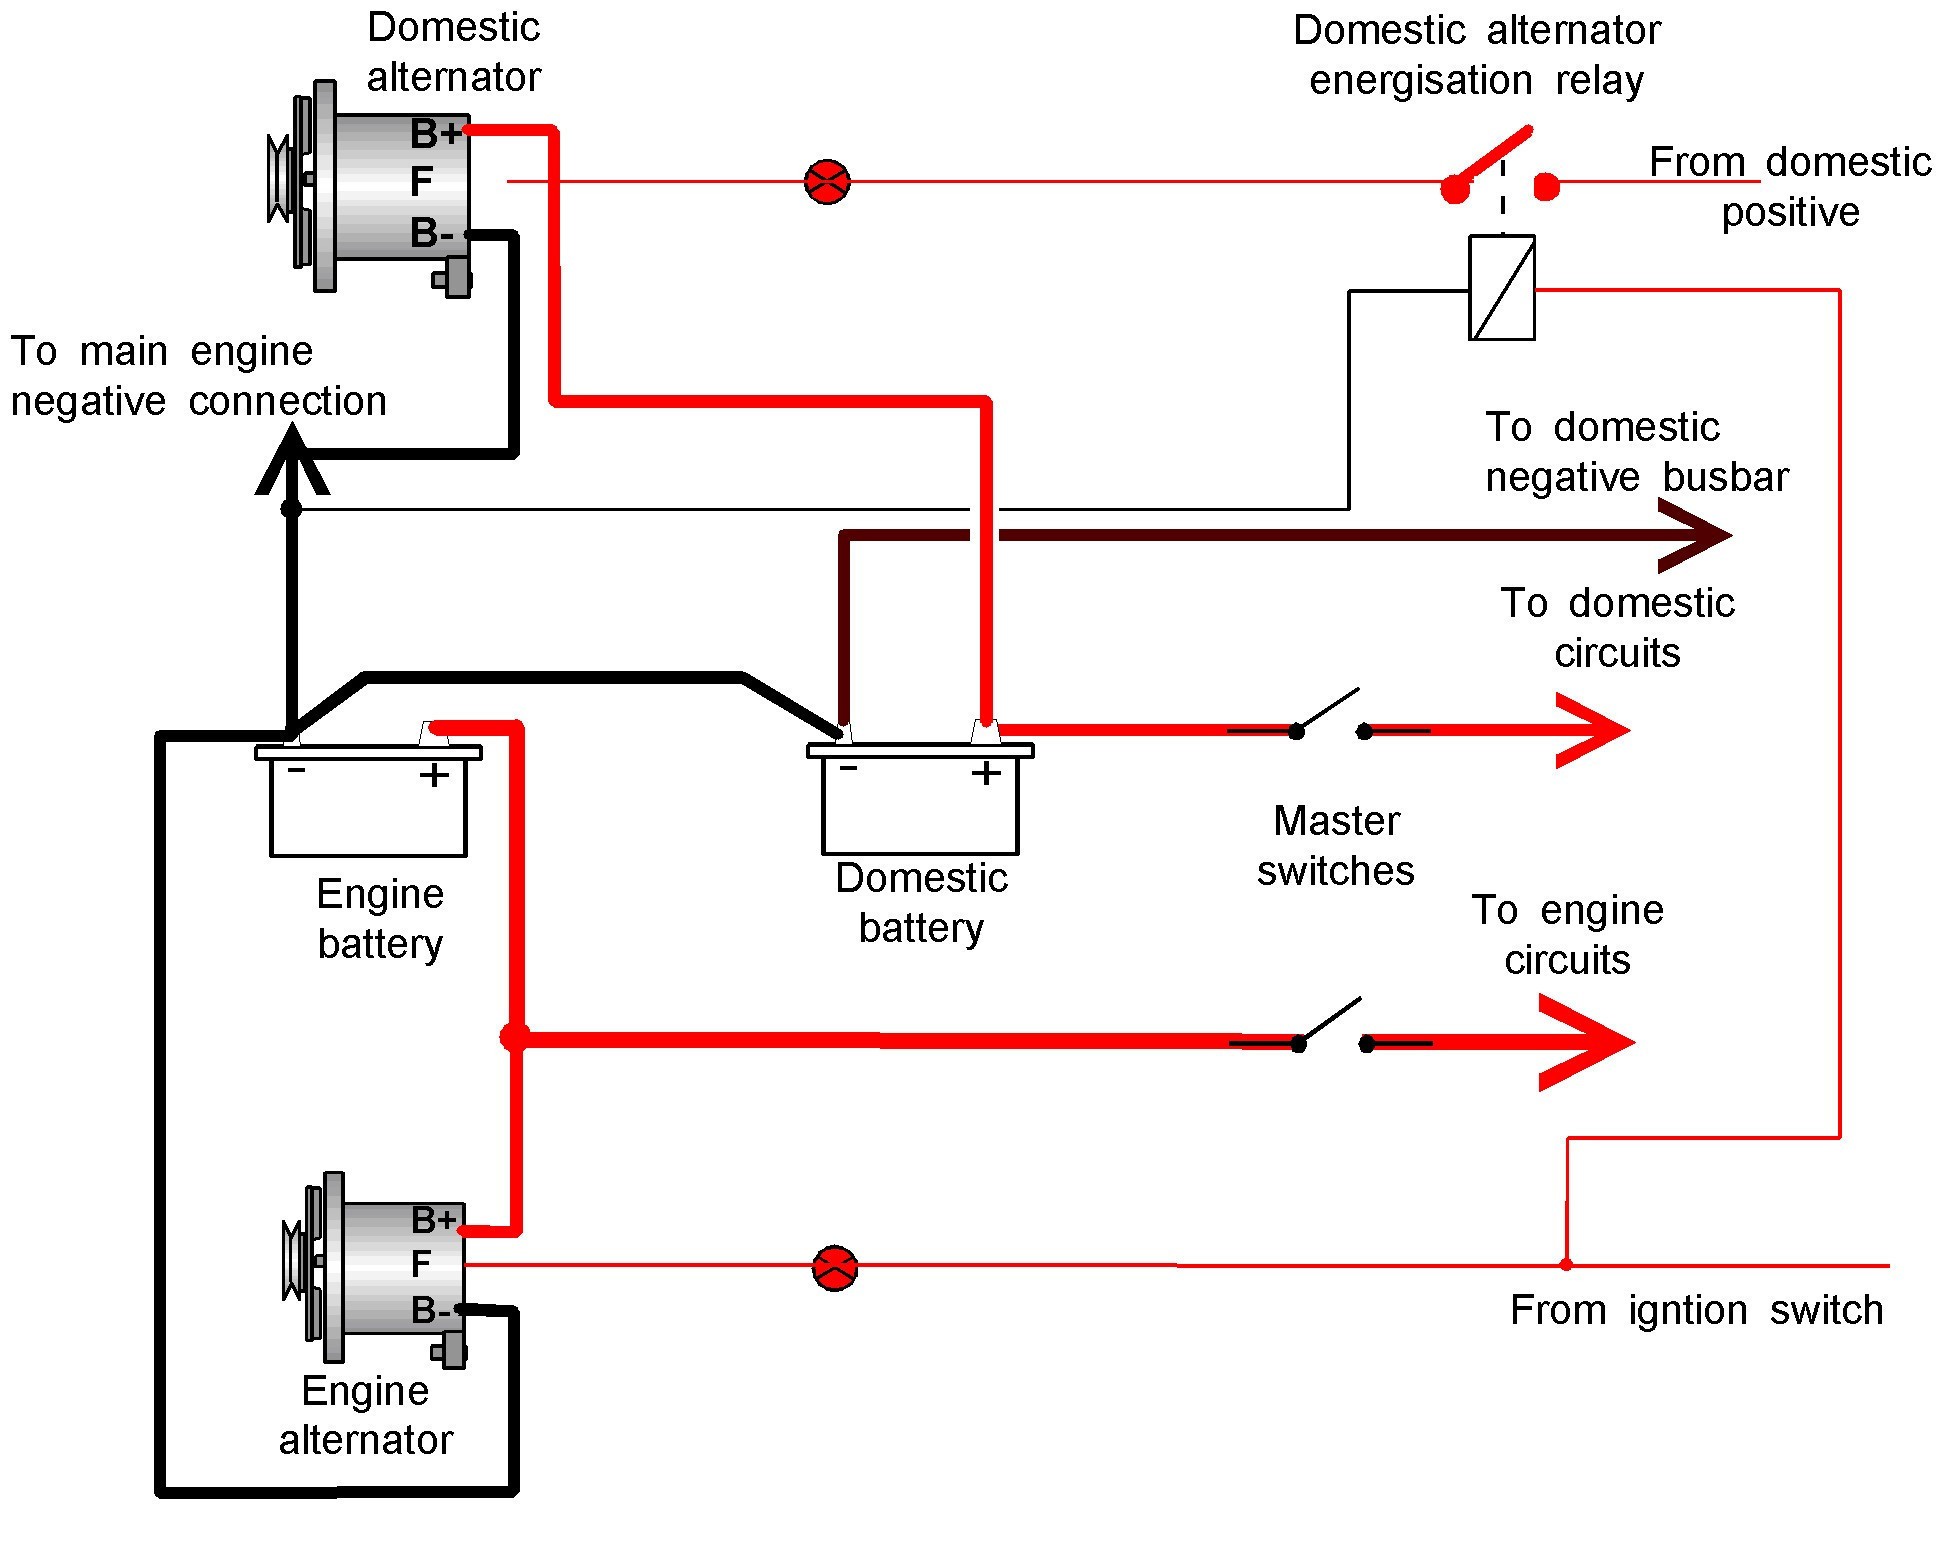 Ac Delco Alternator Wiring Diagram Wiring Diagram Ac Delco Alternator Save Wiring Diagram for Ac Delco Of Ac Delco Alternator Wiring Diagram